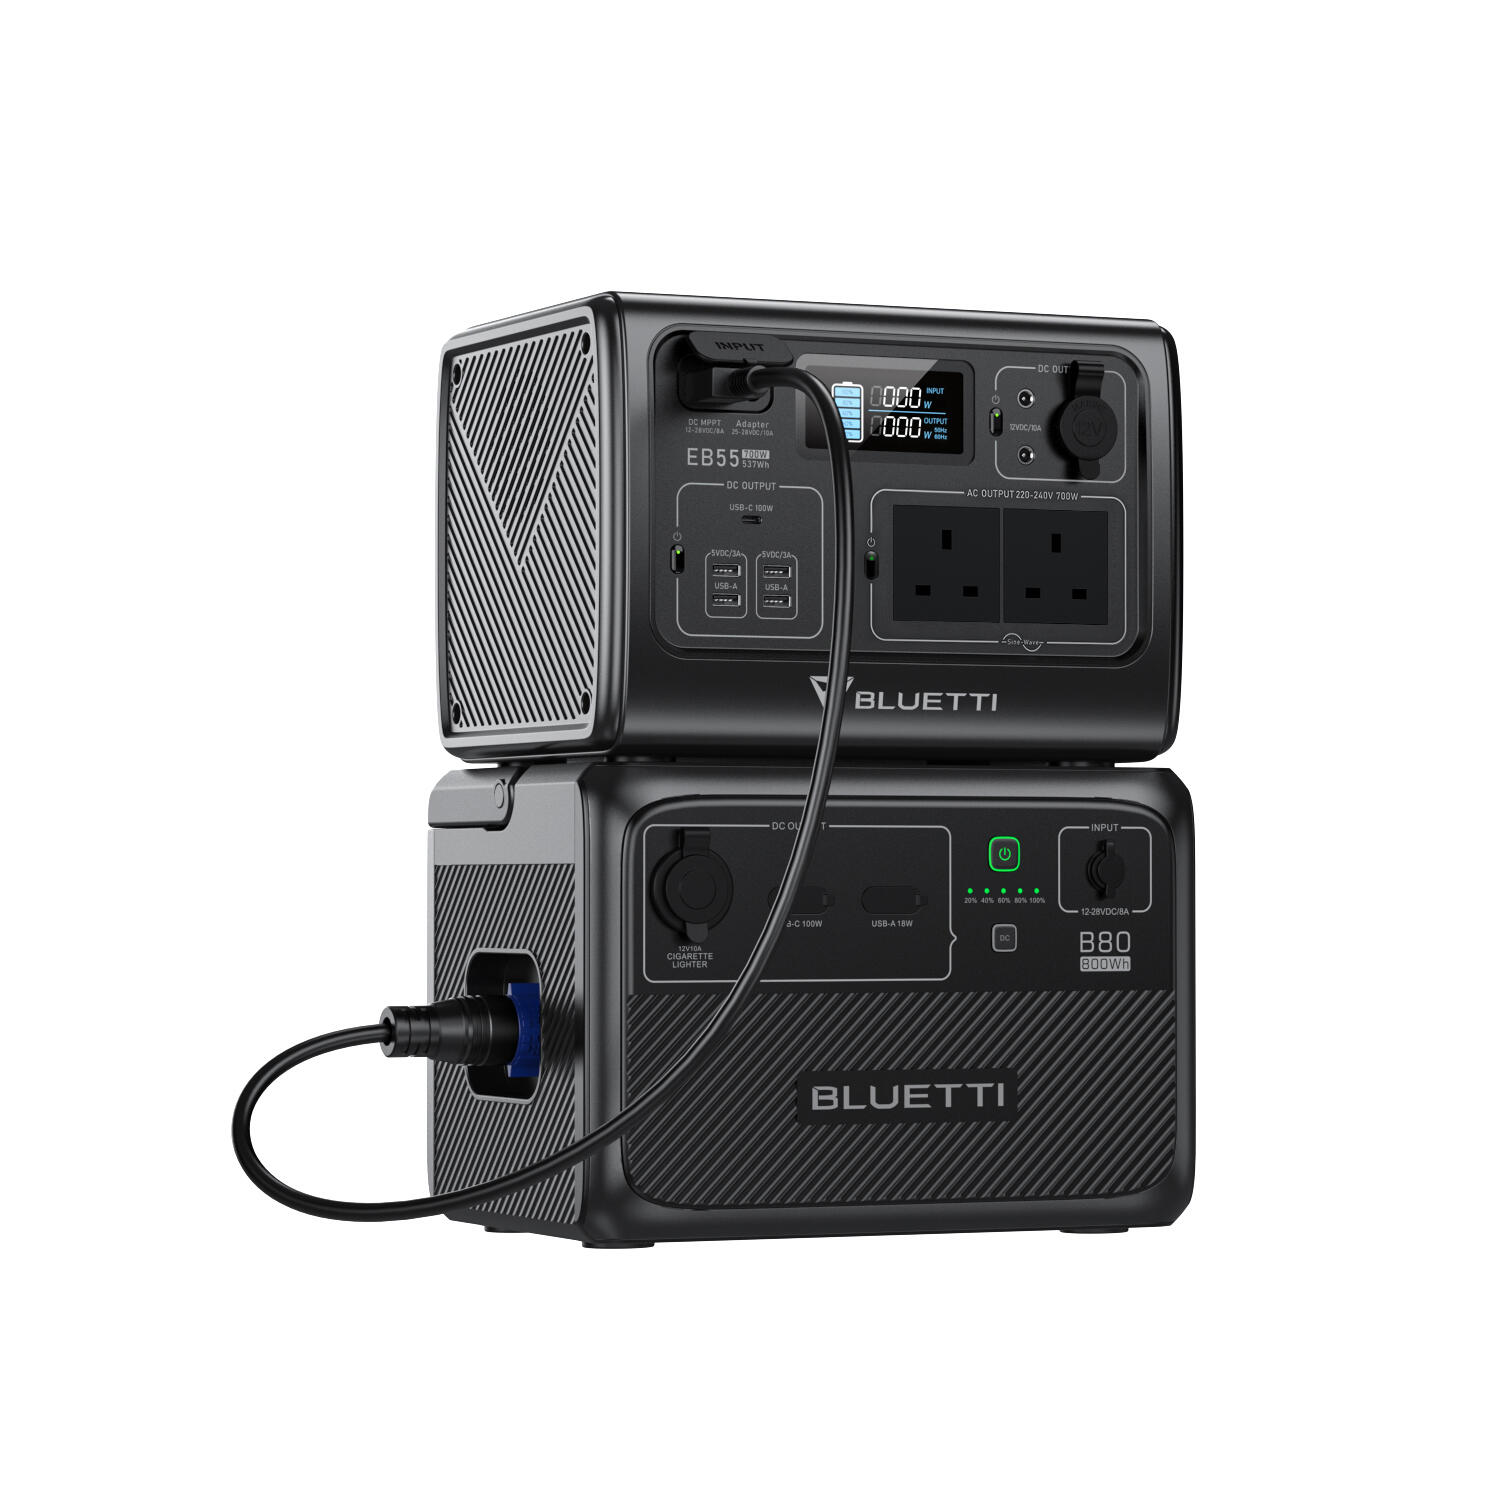 BLUETTI Portable Power Station EB55 and B80 External Battery 1/7